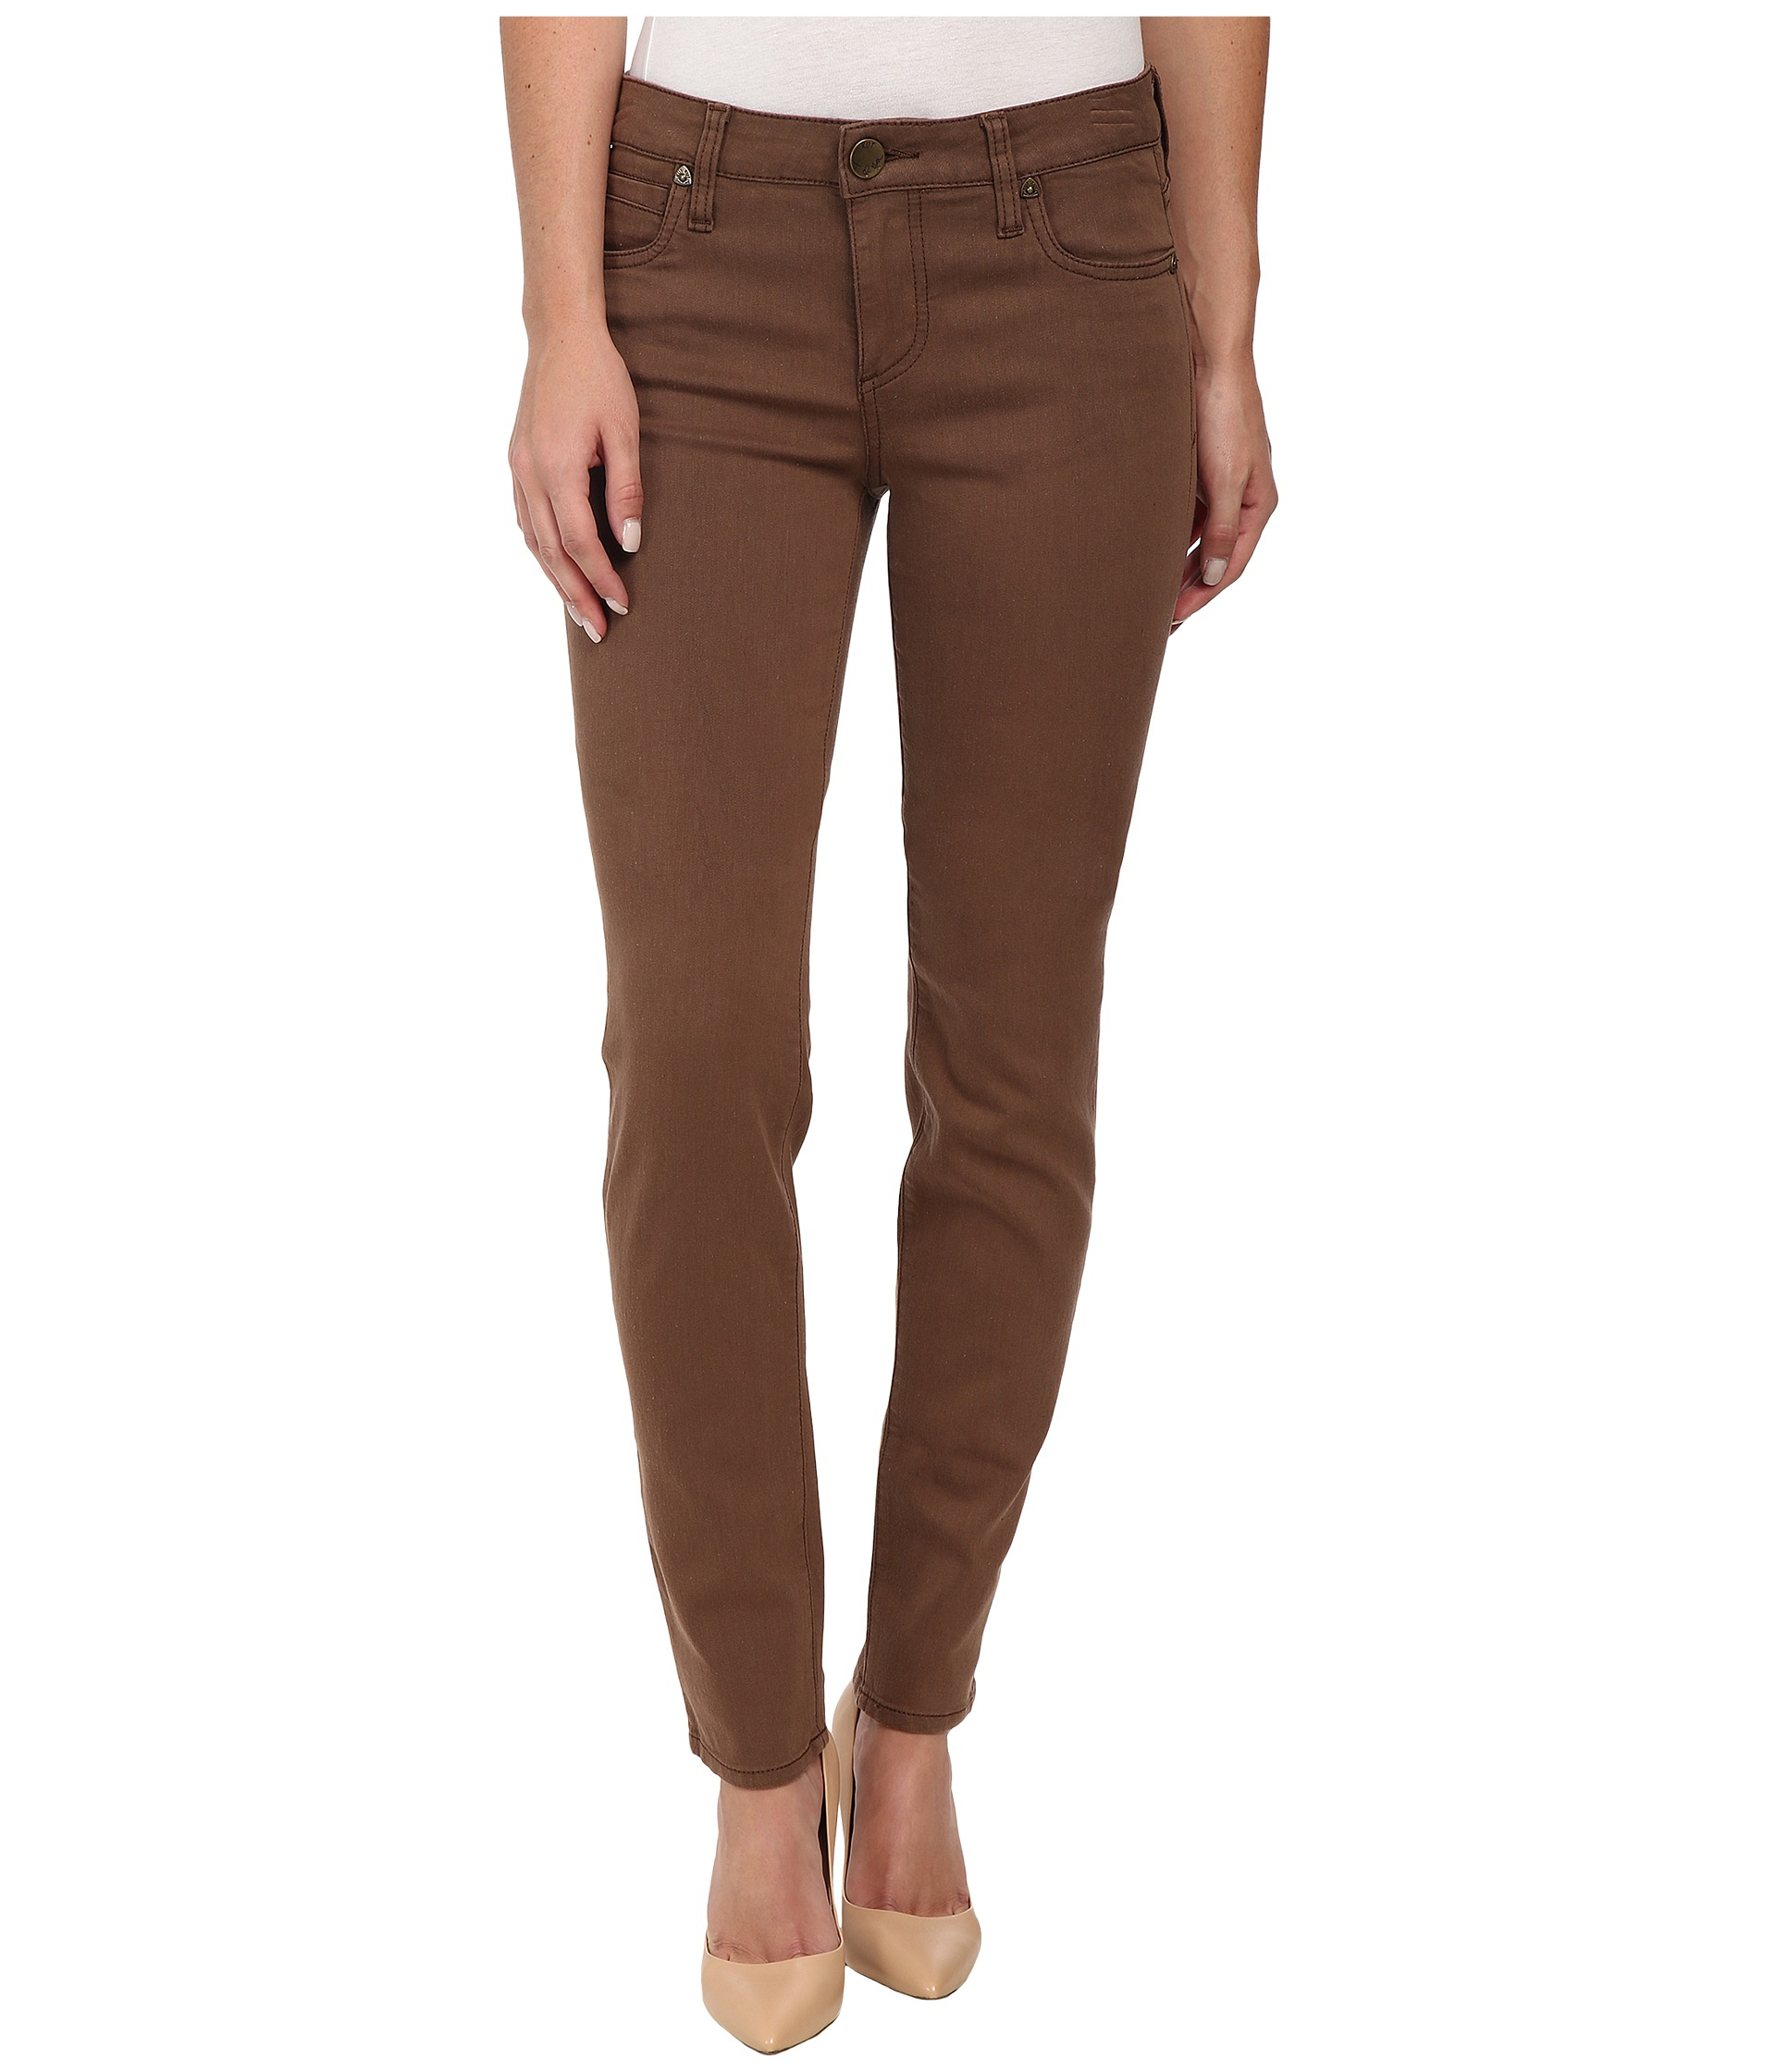 Lyst - Kut From The Kloth Diana Skinny Jeans In Dark Brown in Brown